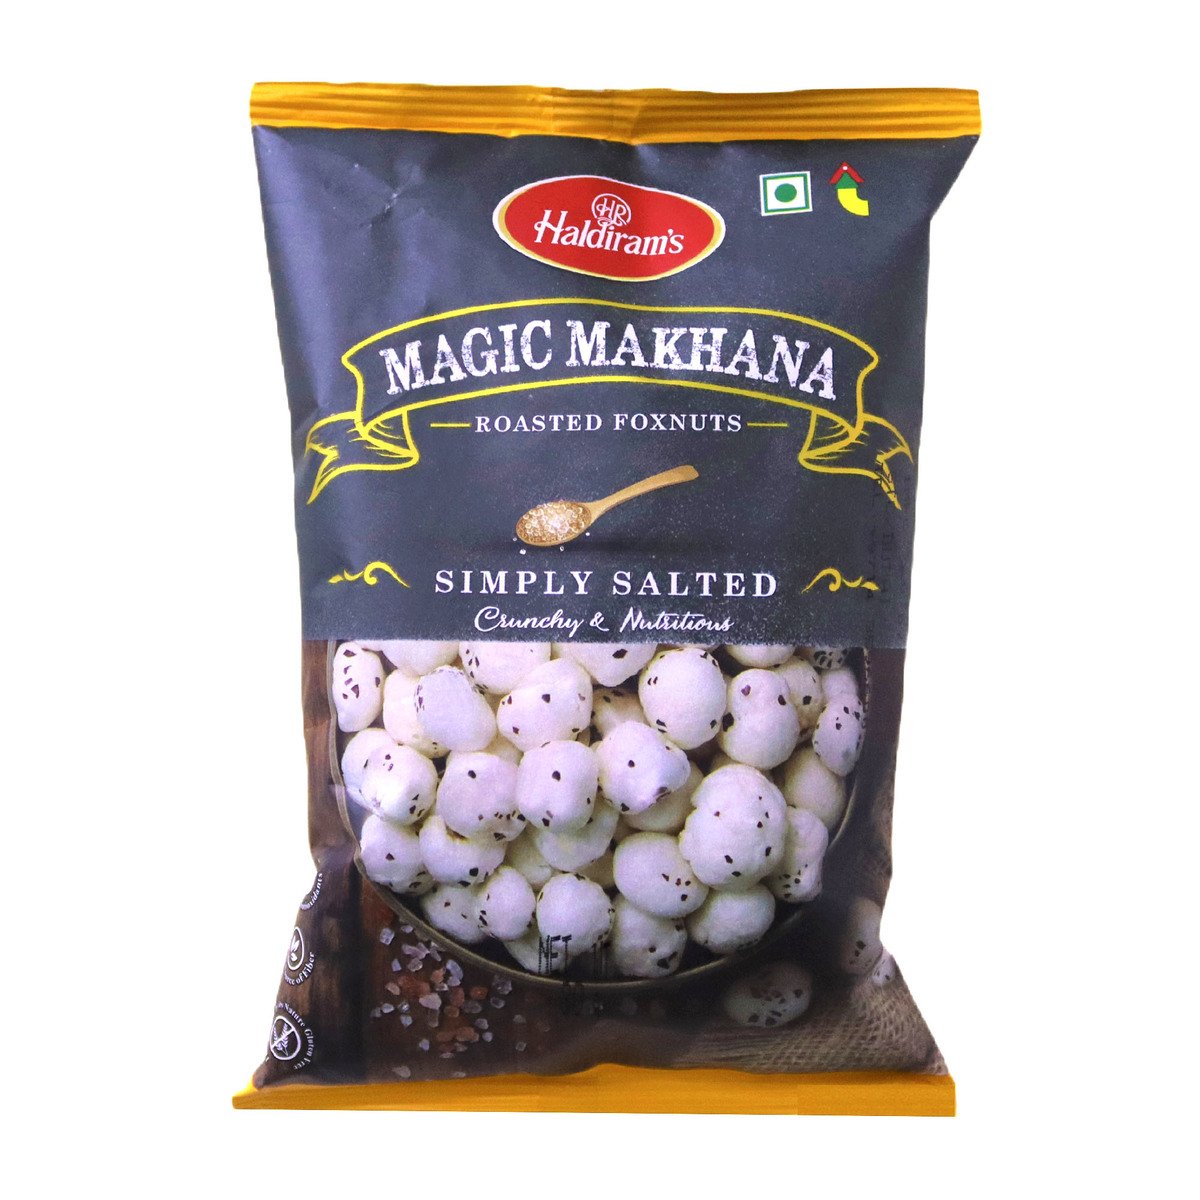 Haldiram's Magic Makhana Roasted Foxnuts Simply Salted 30 g